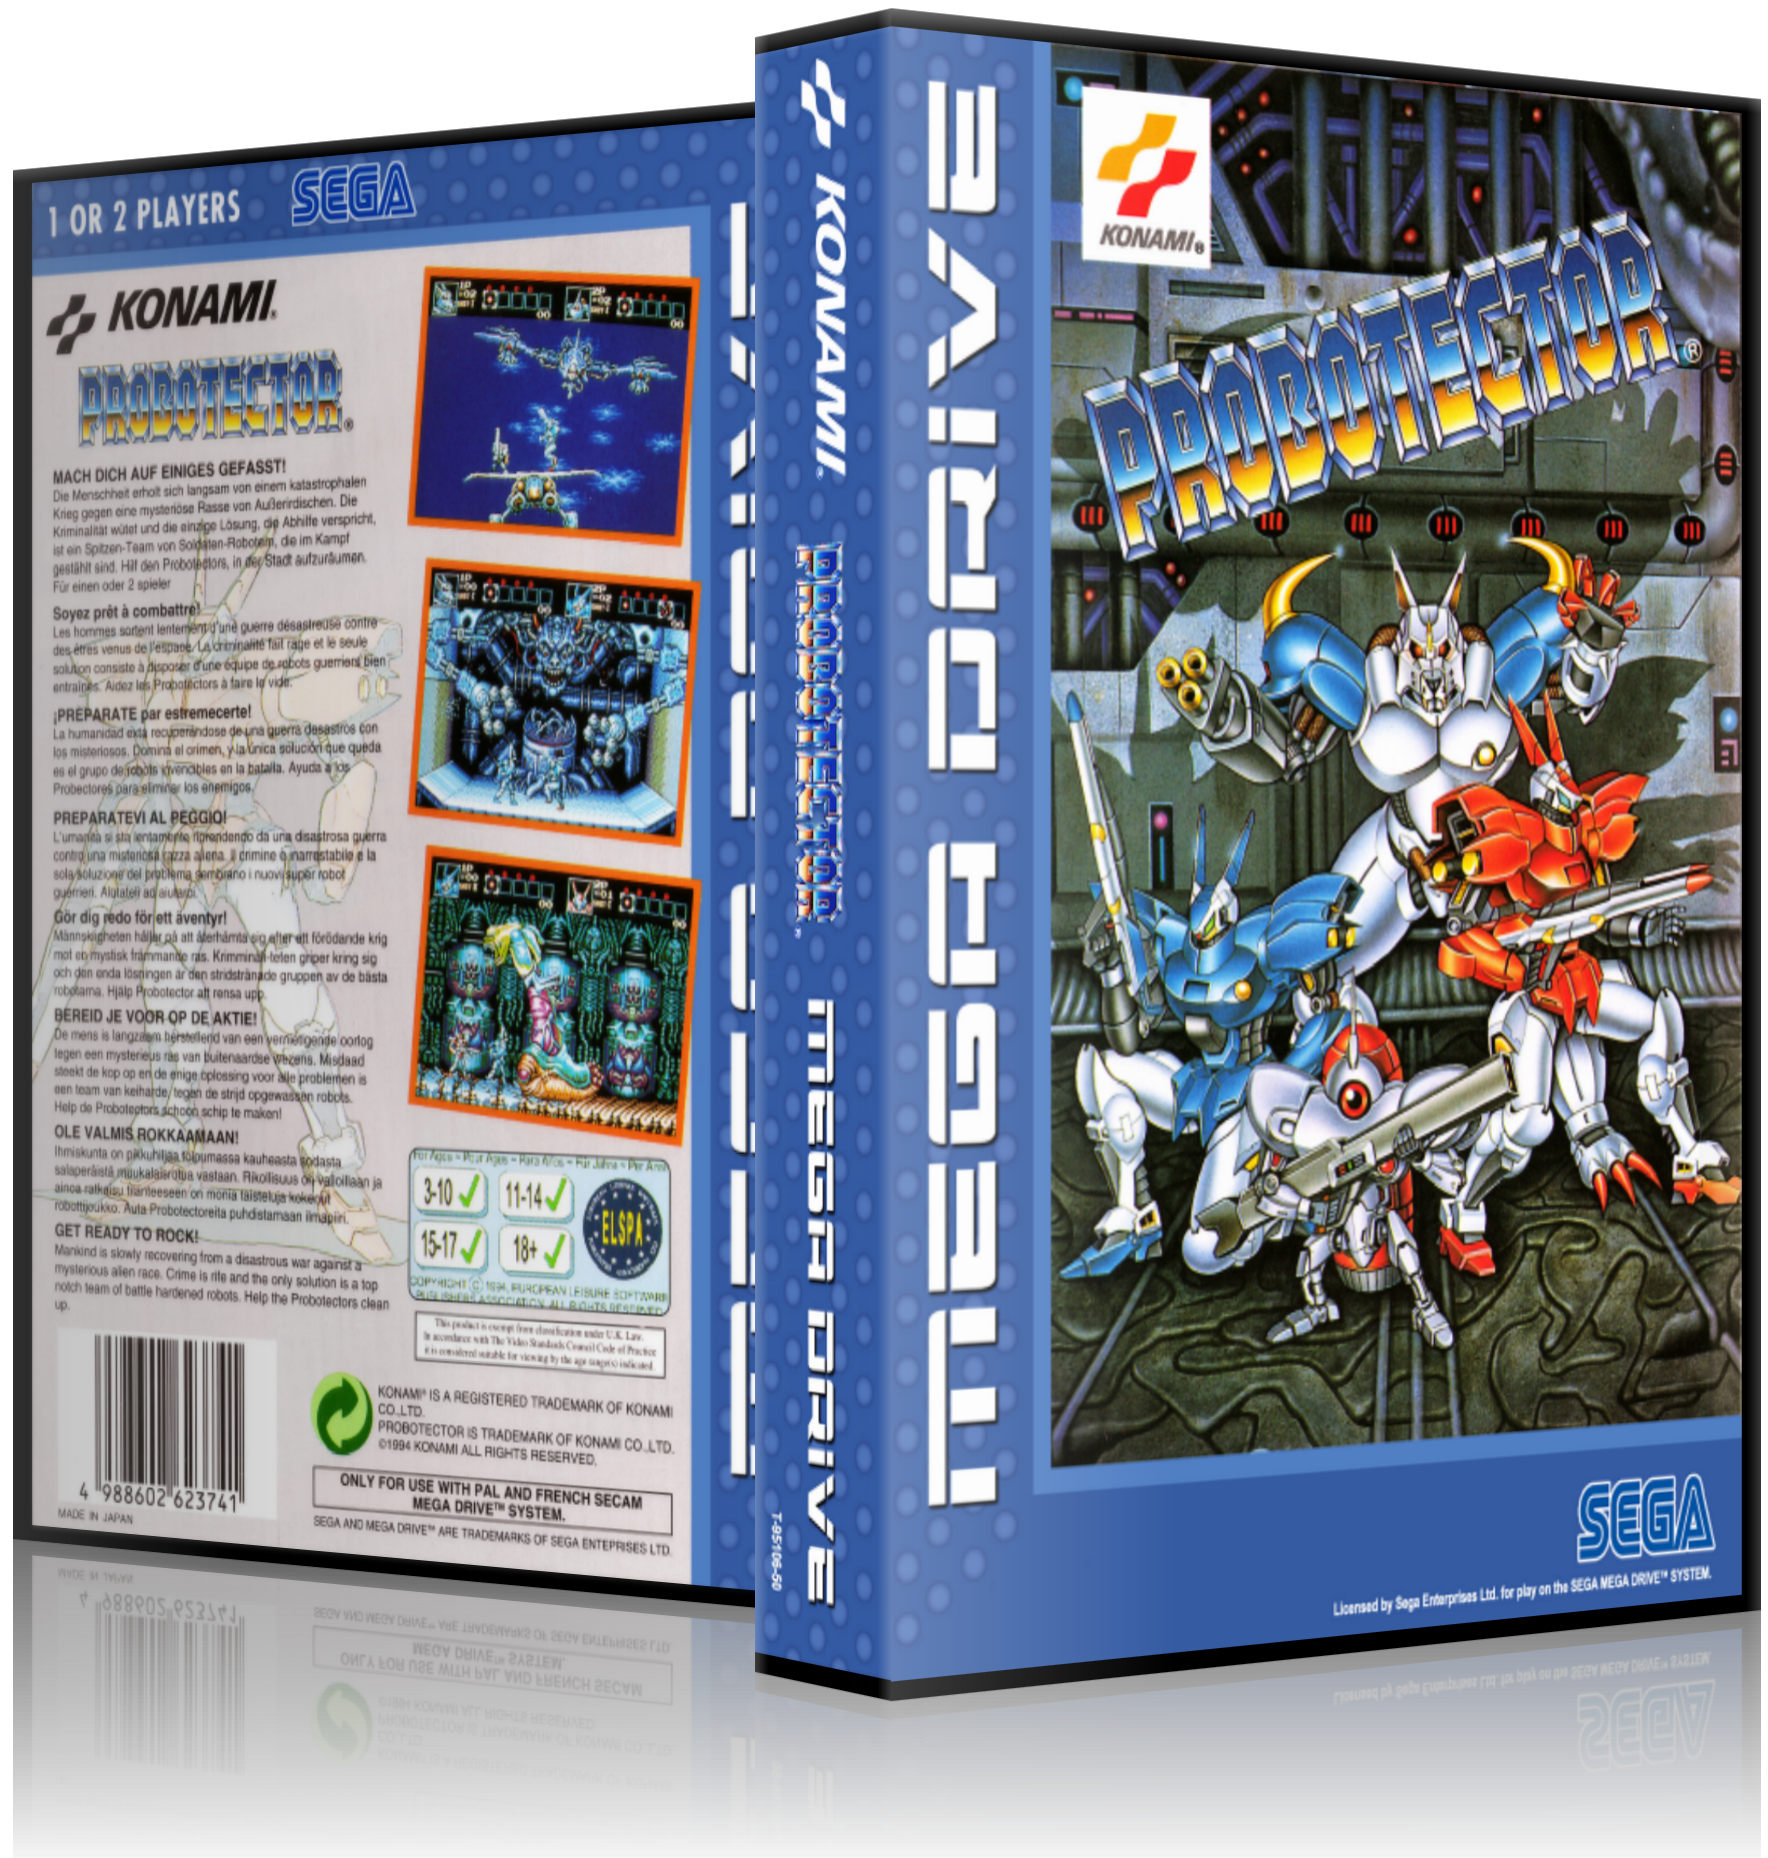 More information about "Sega Genesis/ Mega Drive HD 3D Boxes"